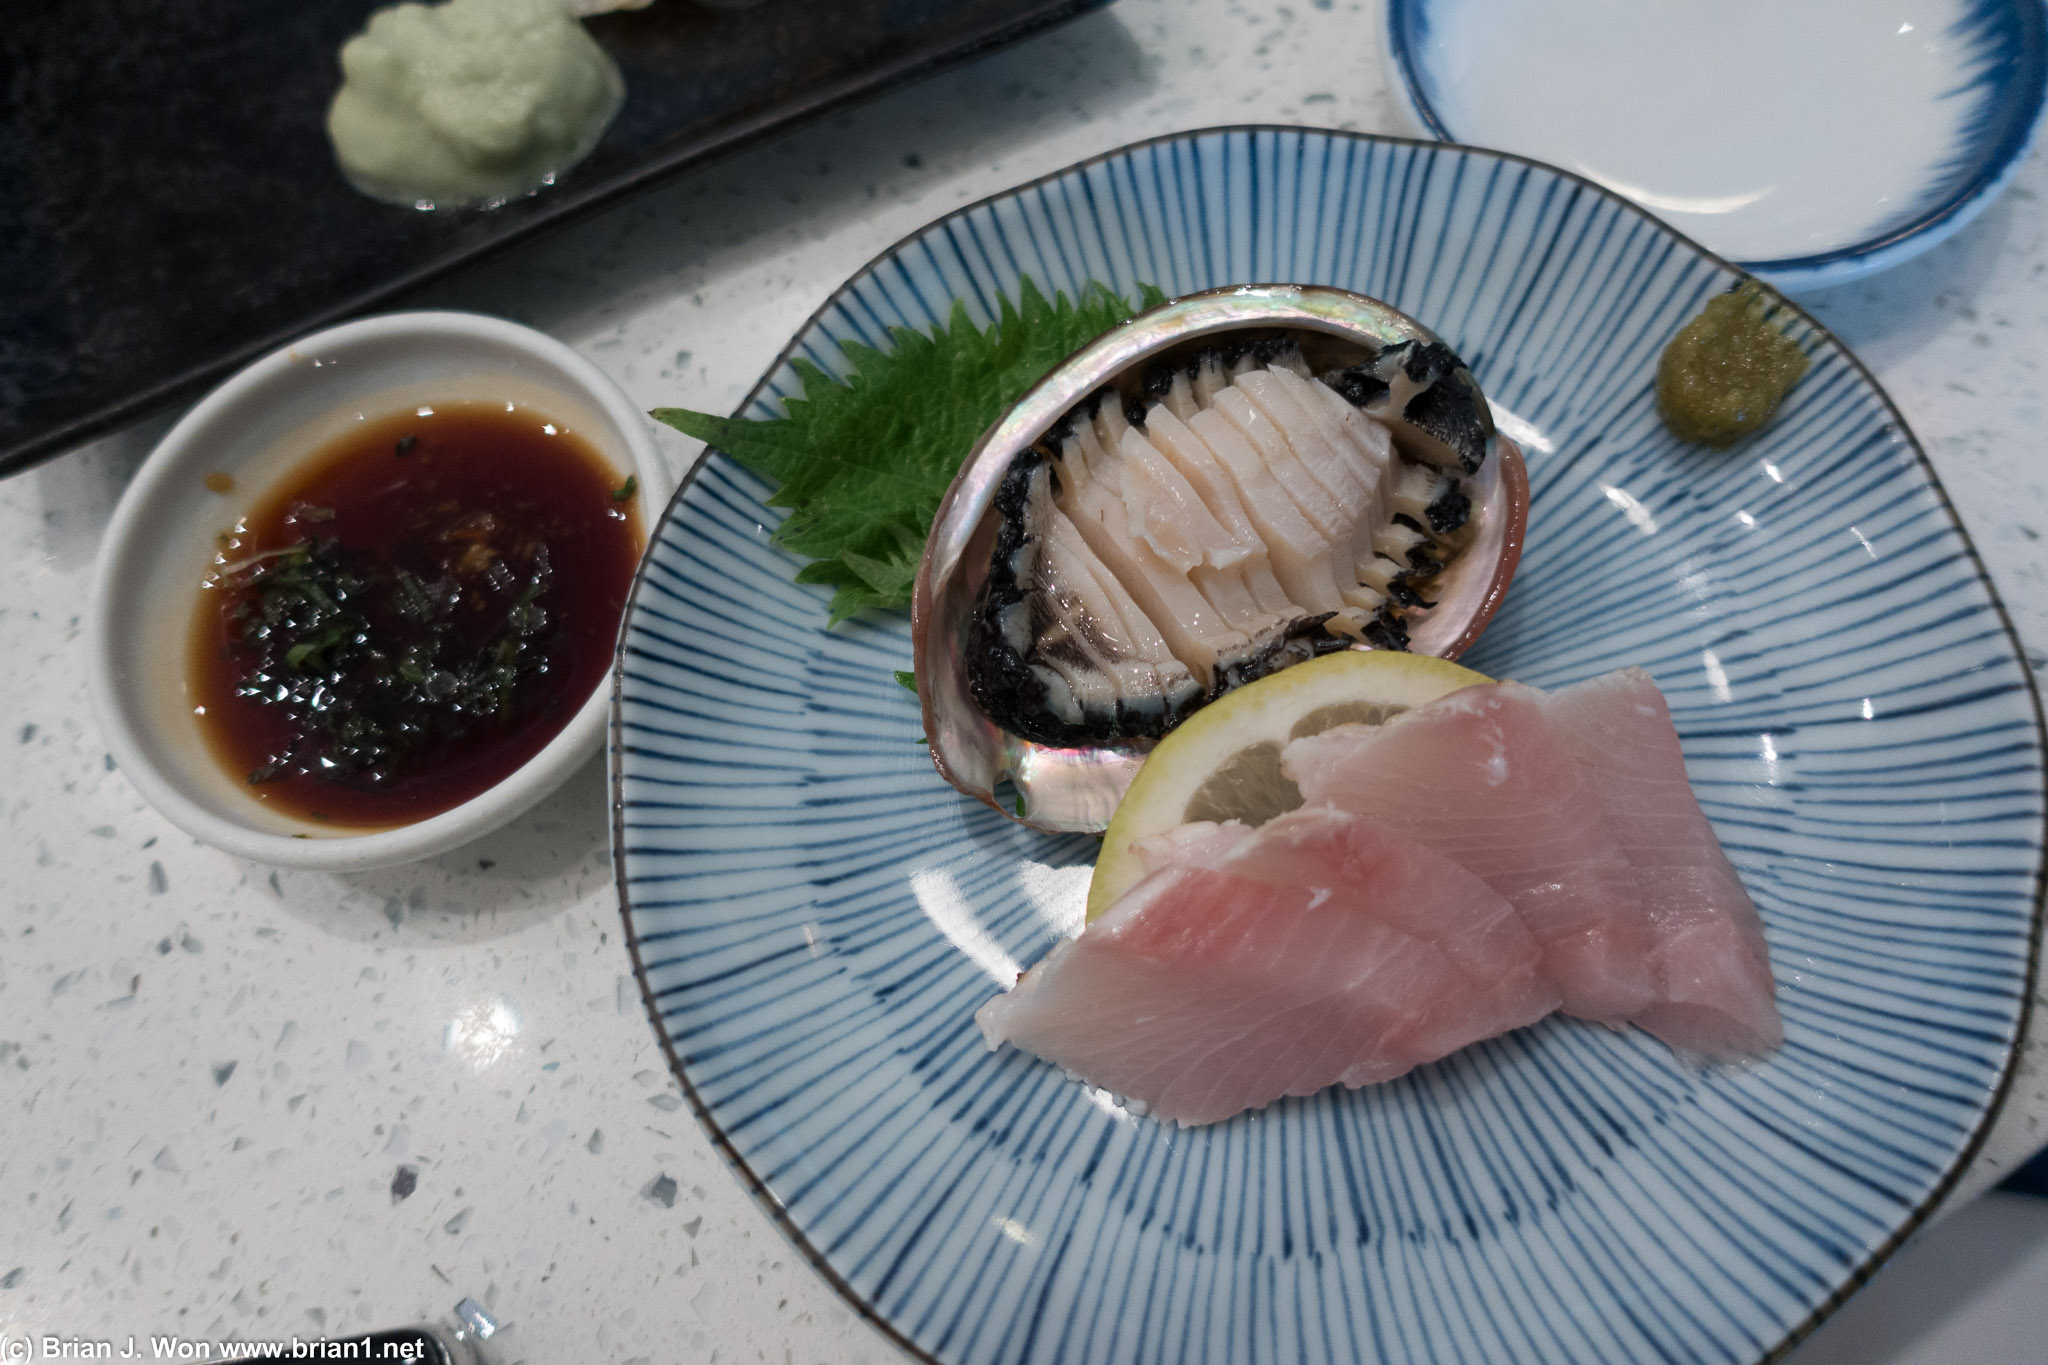 Abalone and Australian hirame (yellowtail) sashimi. Abalone was surprisingly good.